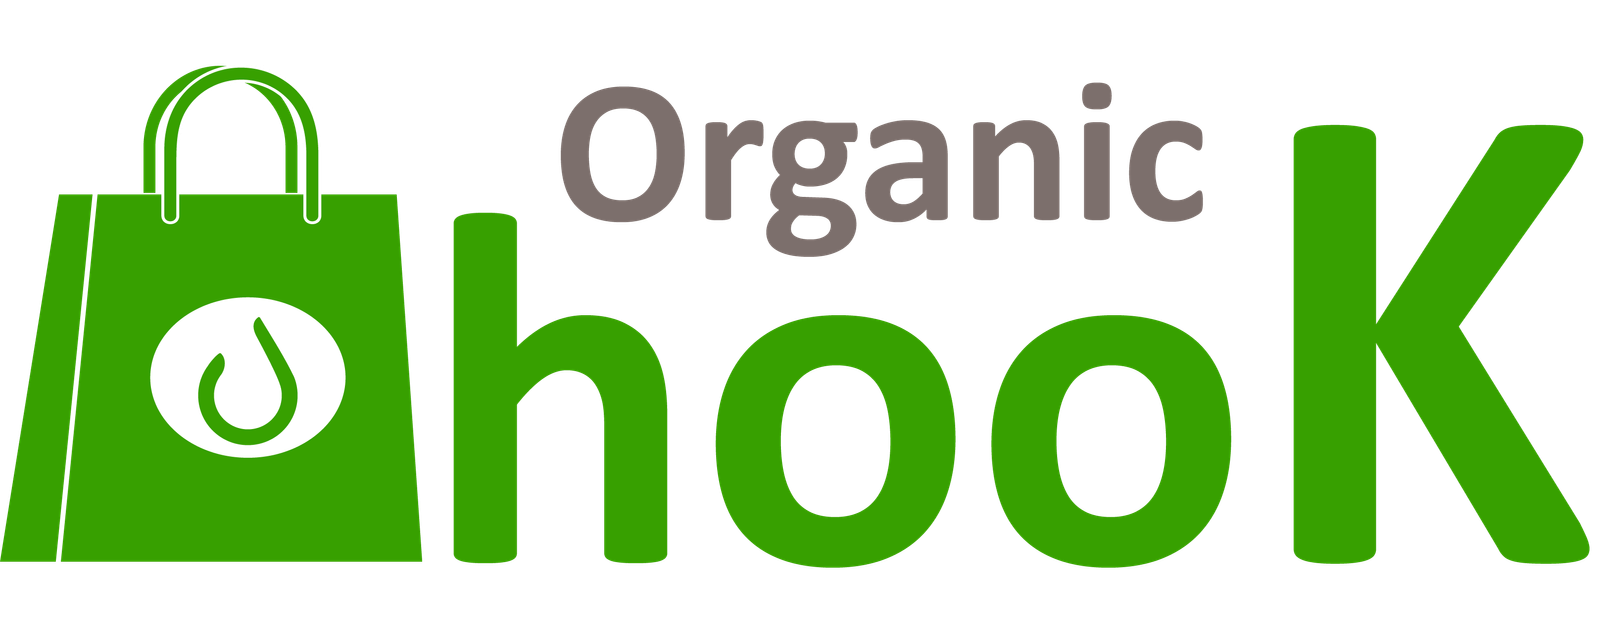 Organic Hook